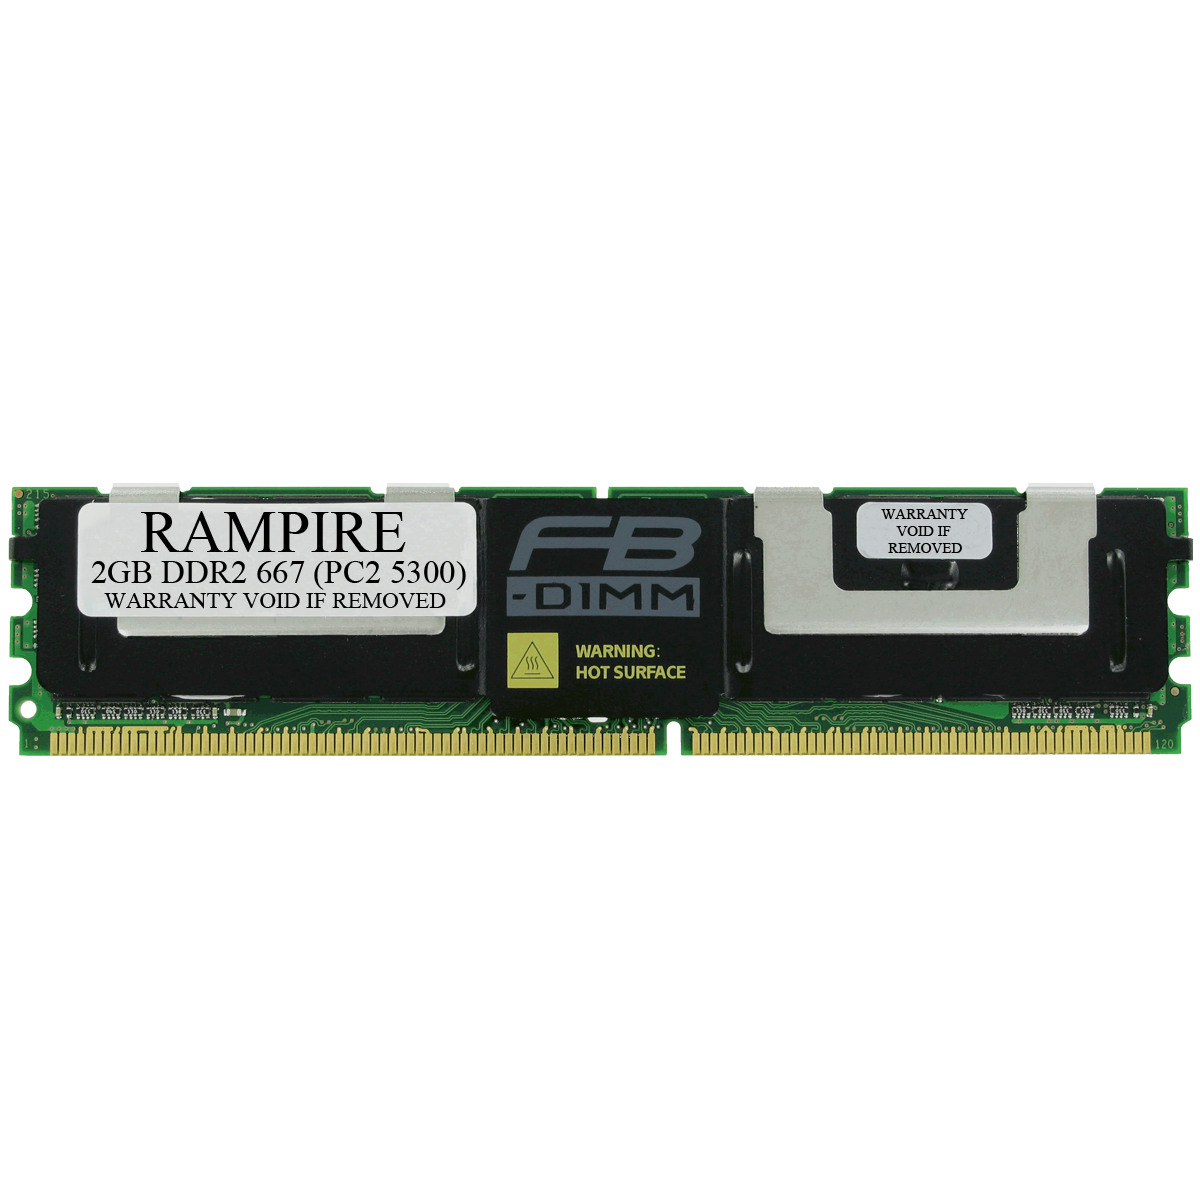 RAMPIRE 2GB DDR2 667 (PC2 5300) 240-Pin SDRAM 2Rx4 Standard Profile 1.8V ECC Fully Buffered Server Memory